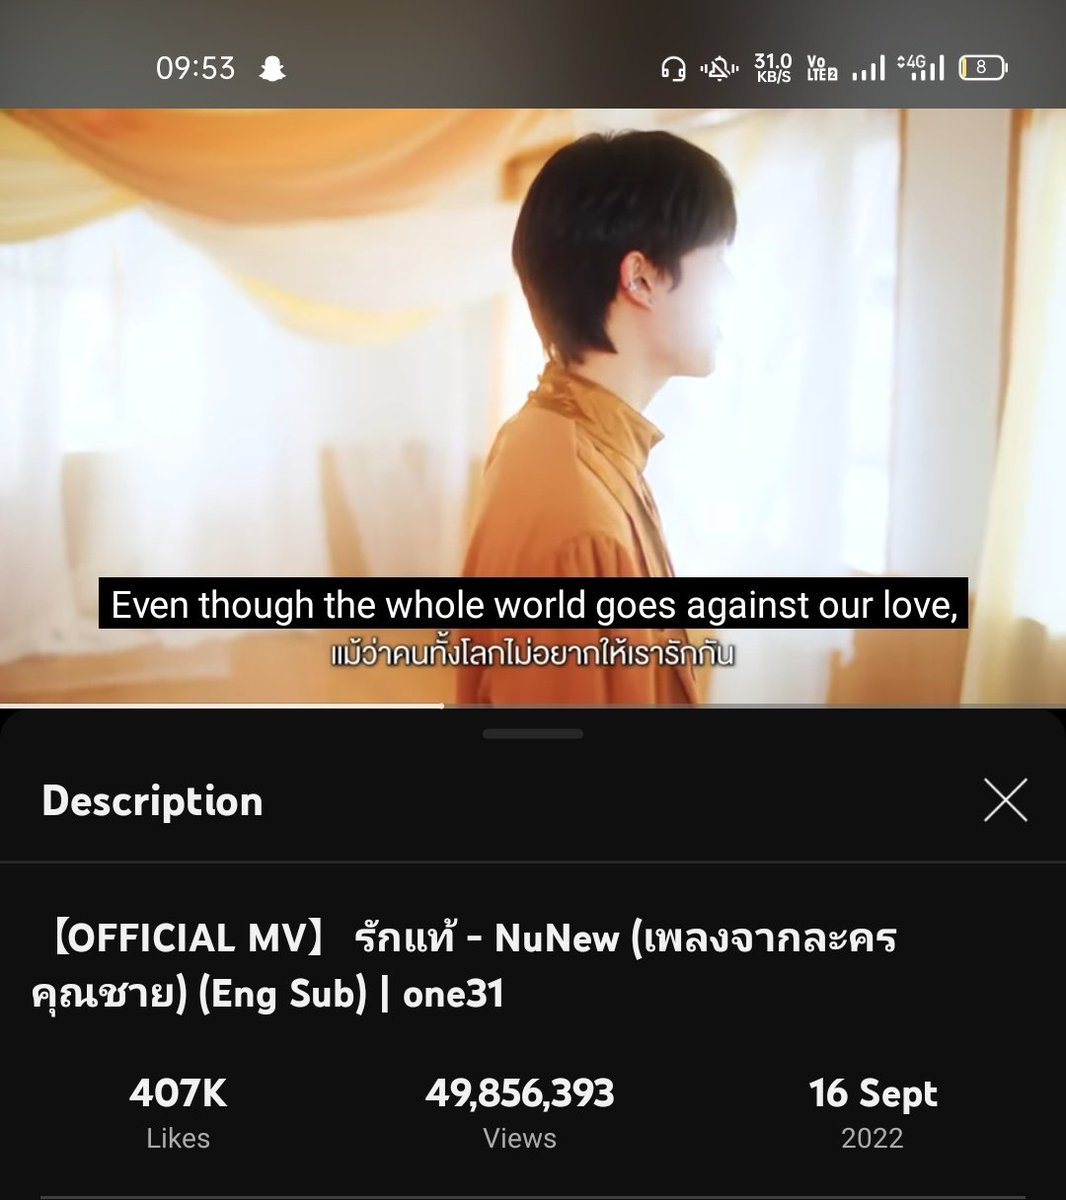 less than 150K to reach 50M views!!
stream stream stream ~

#รักแท้OstคุณชายByนุนิว
@CwrNew #NuNew #NanaNu